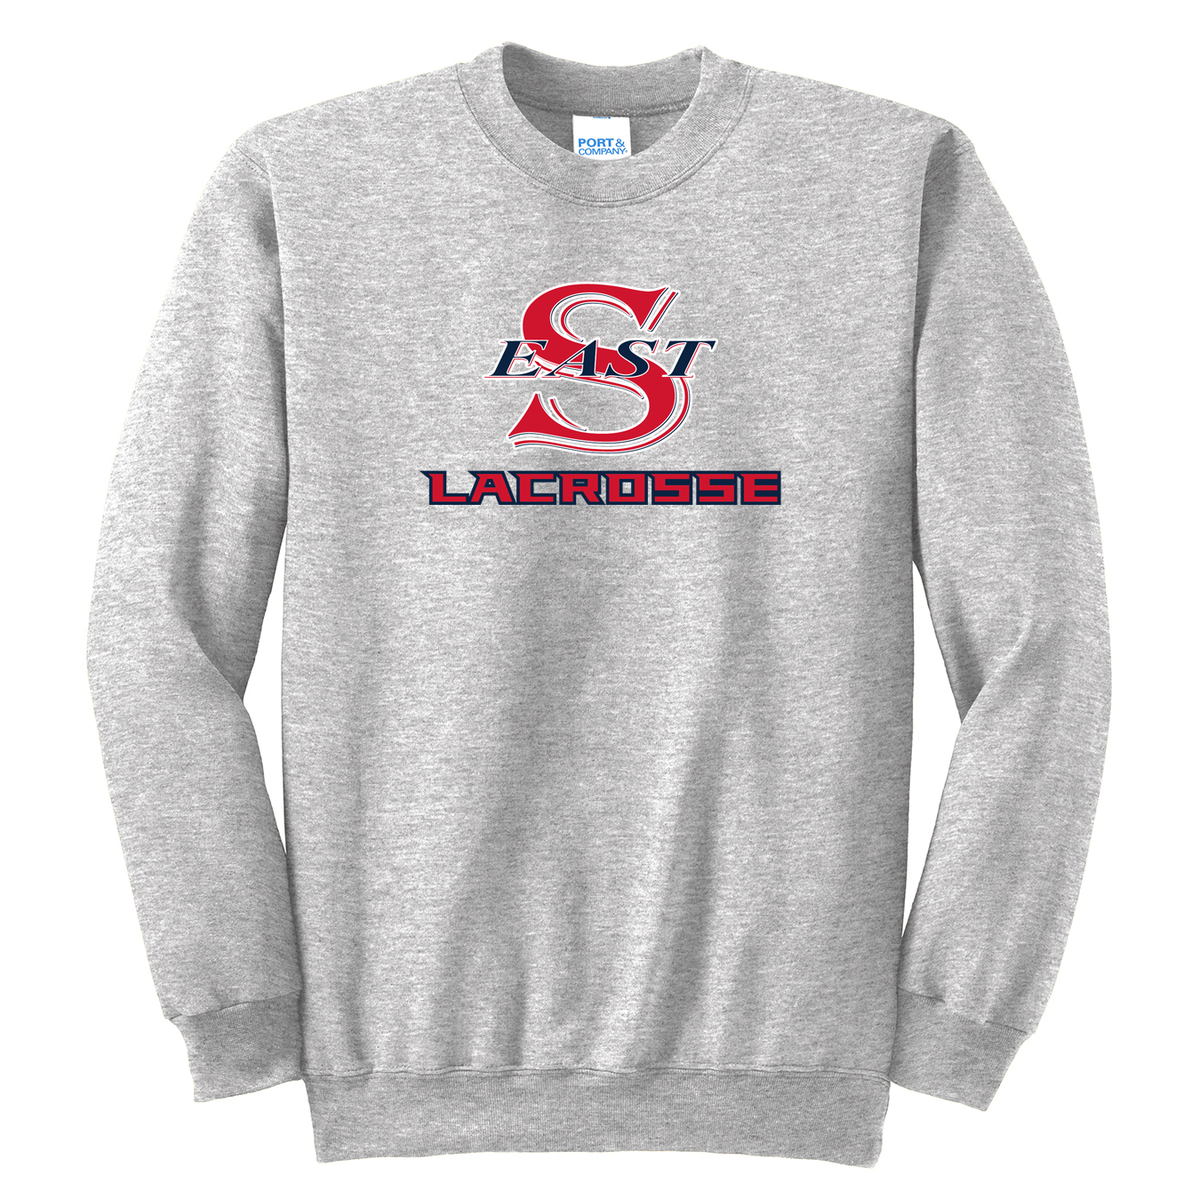 Smithtown East Lacrosse Crew Neck Sweater